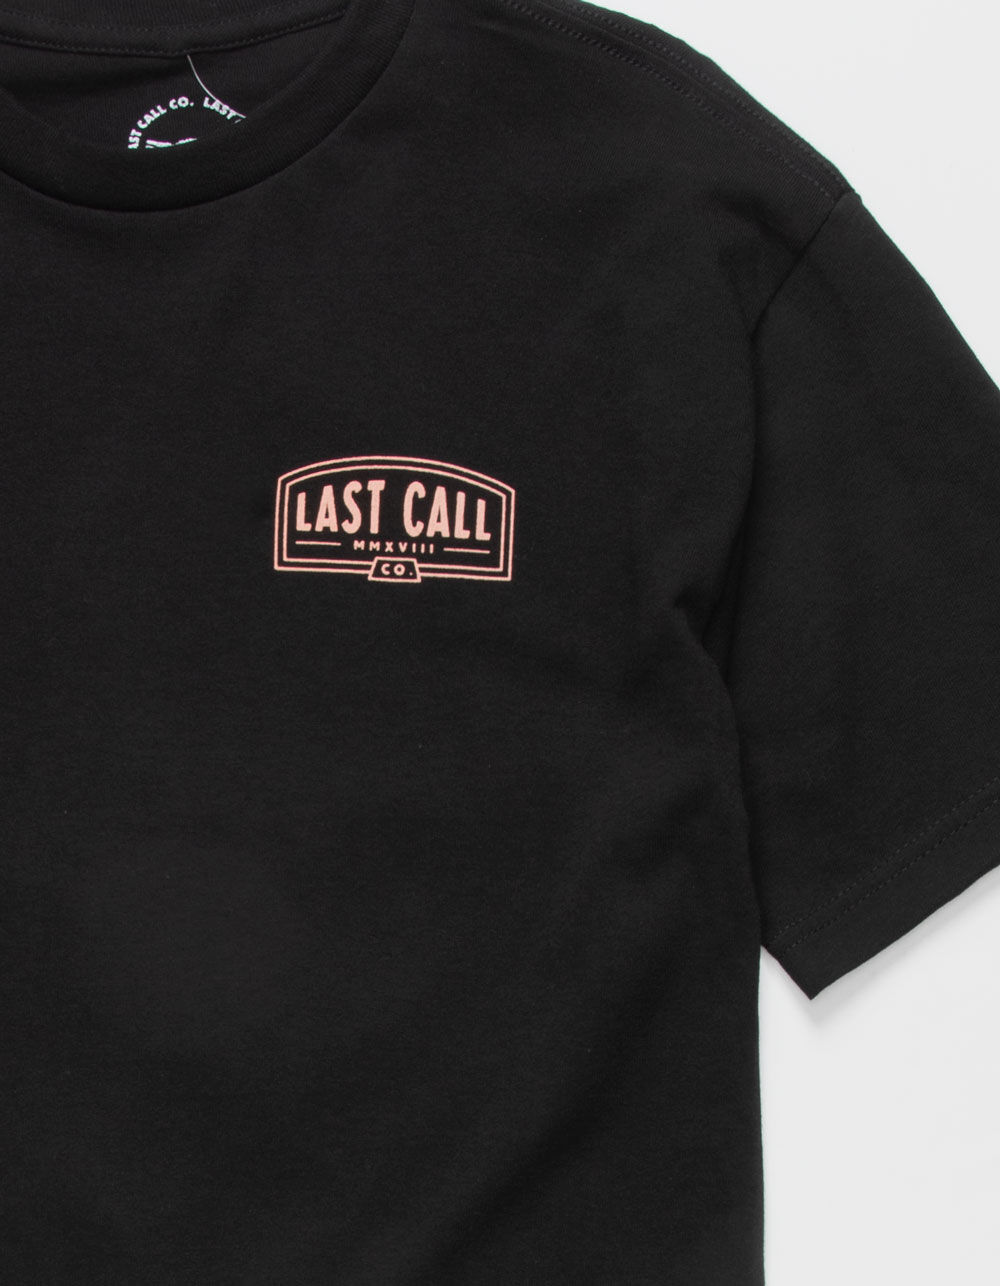 Last Call Co. t shirt Size L